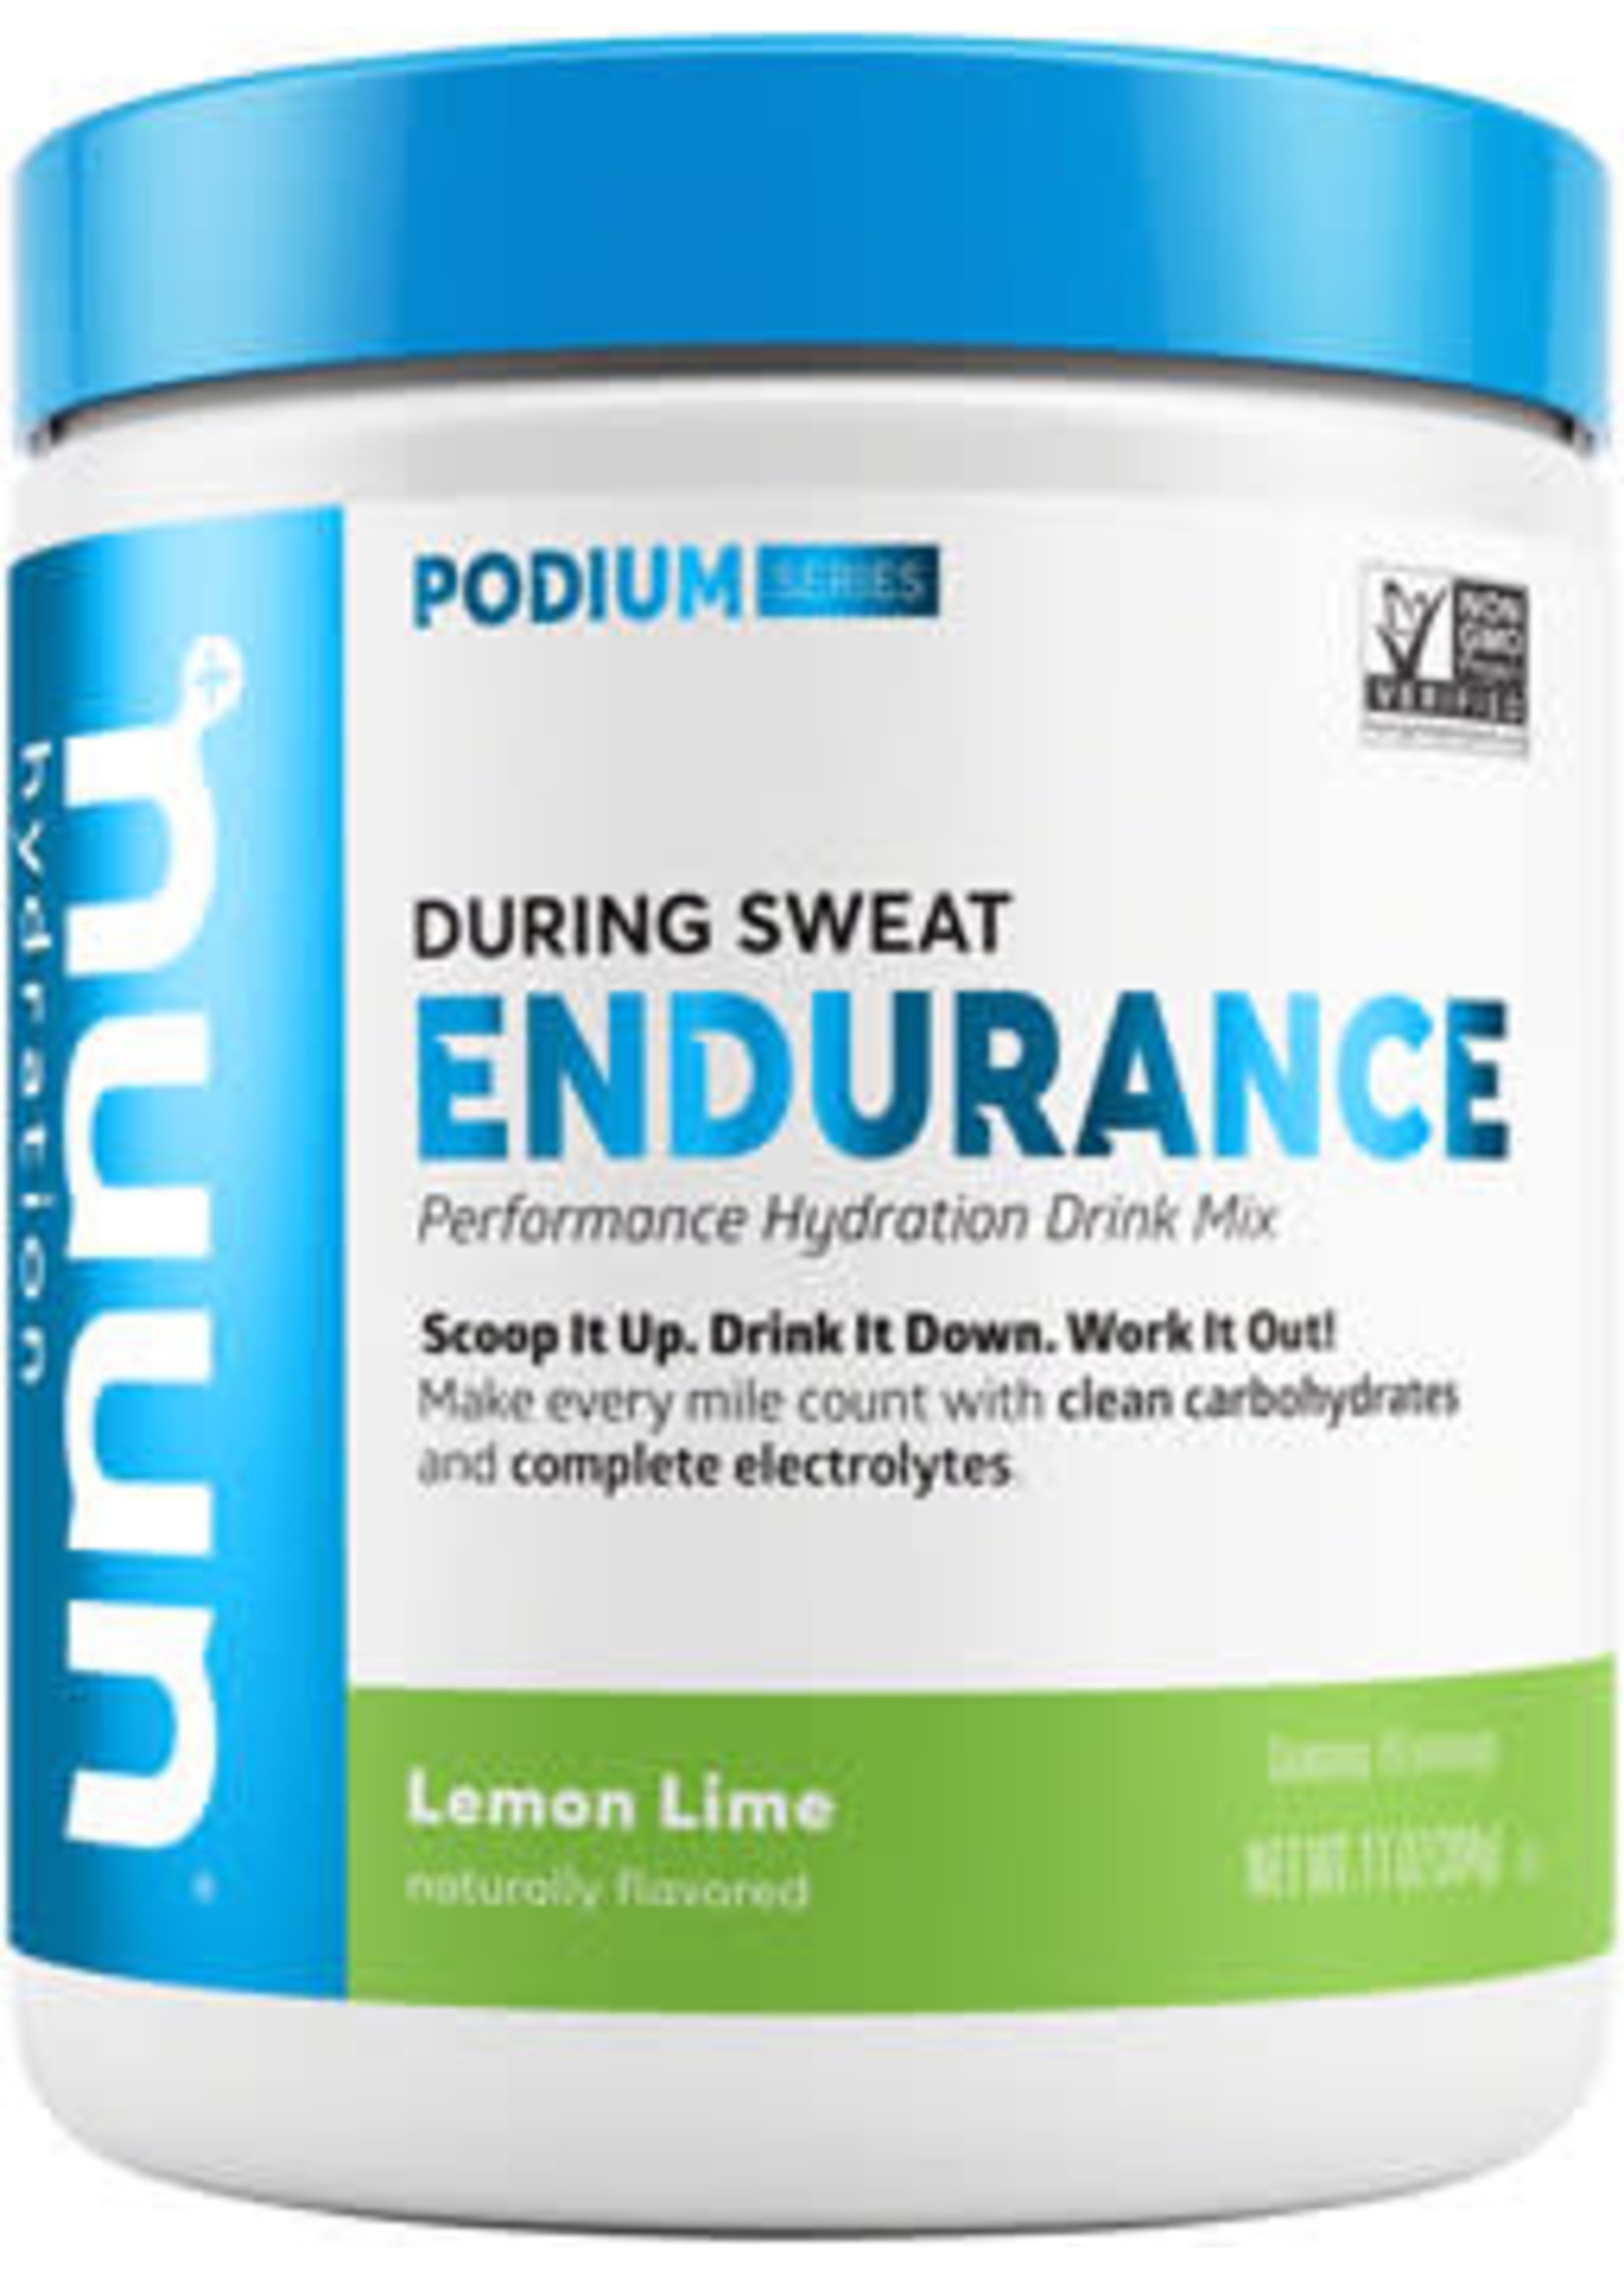 Nuun Nuun Endurance Hydration Drink Mix - Lemon Lime, 16 Serving Canister